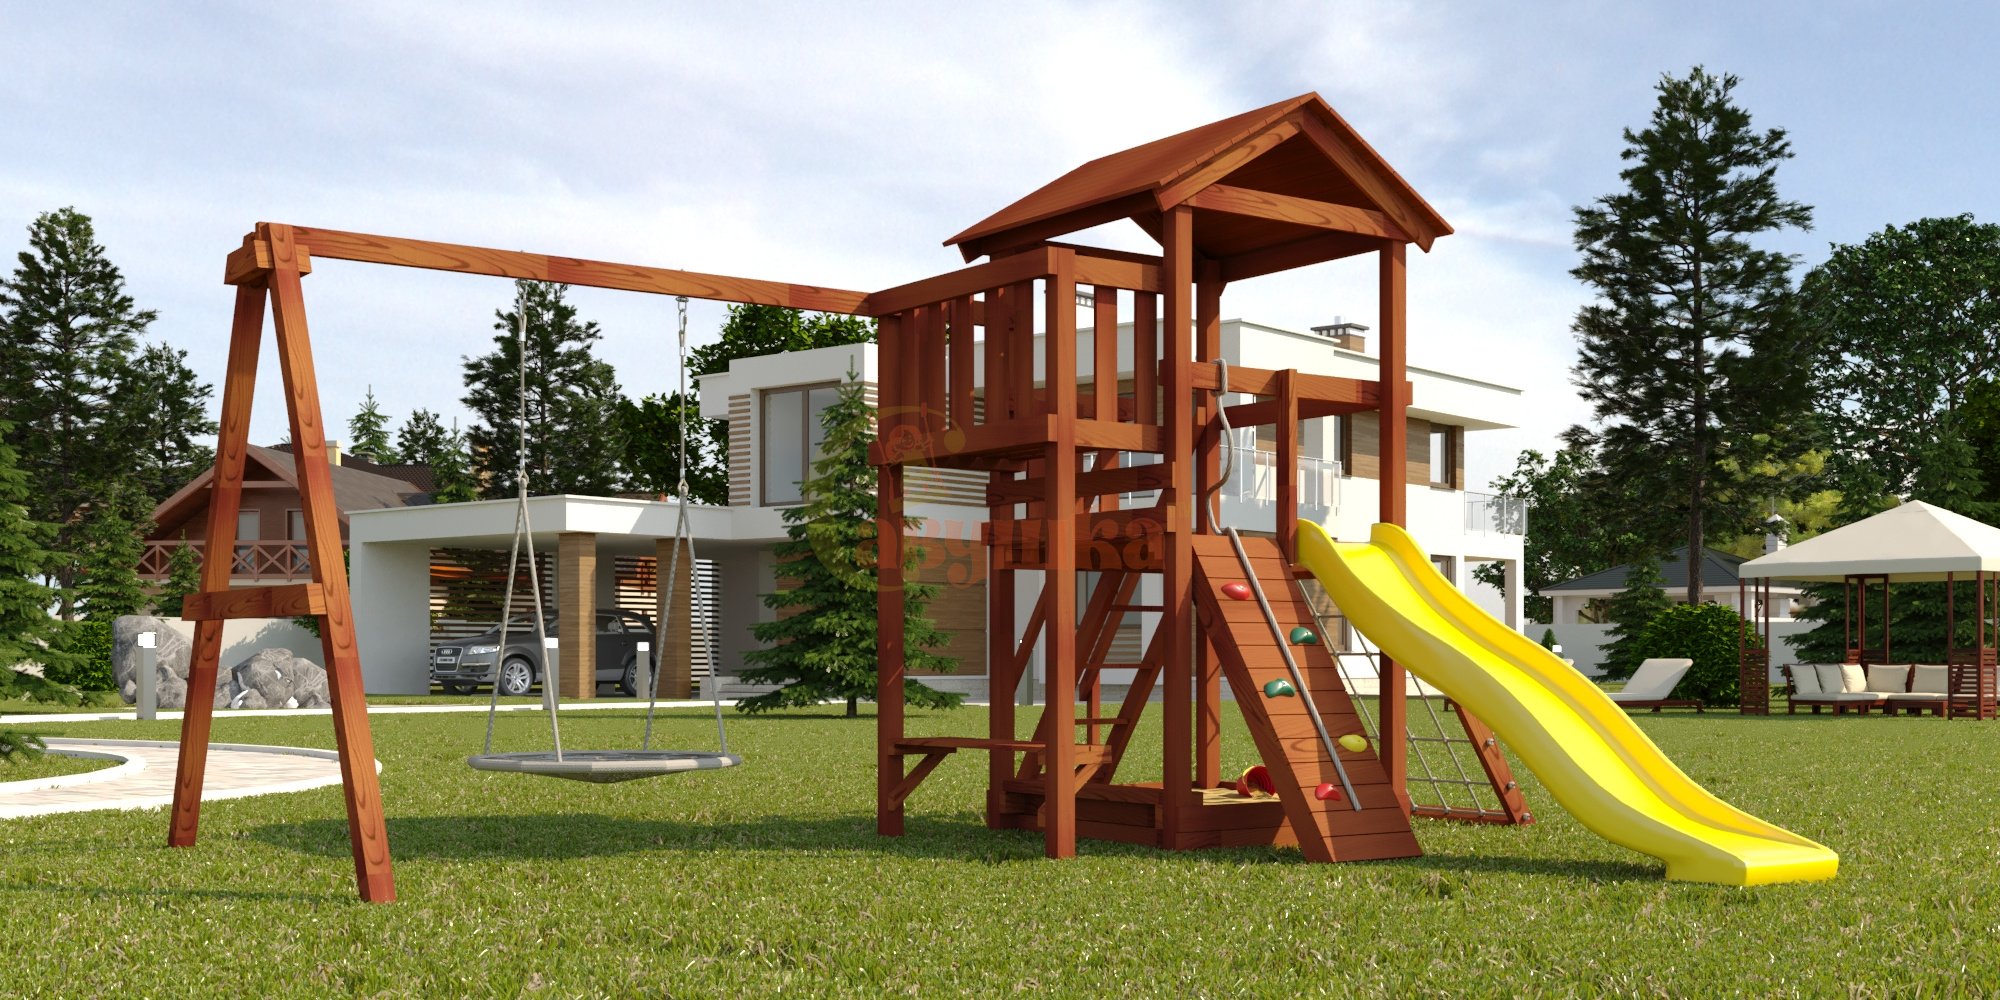 Детская площадка Савушка Мастер 2 с качелями Гнездо 1 метр (Махагон)